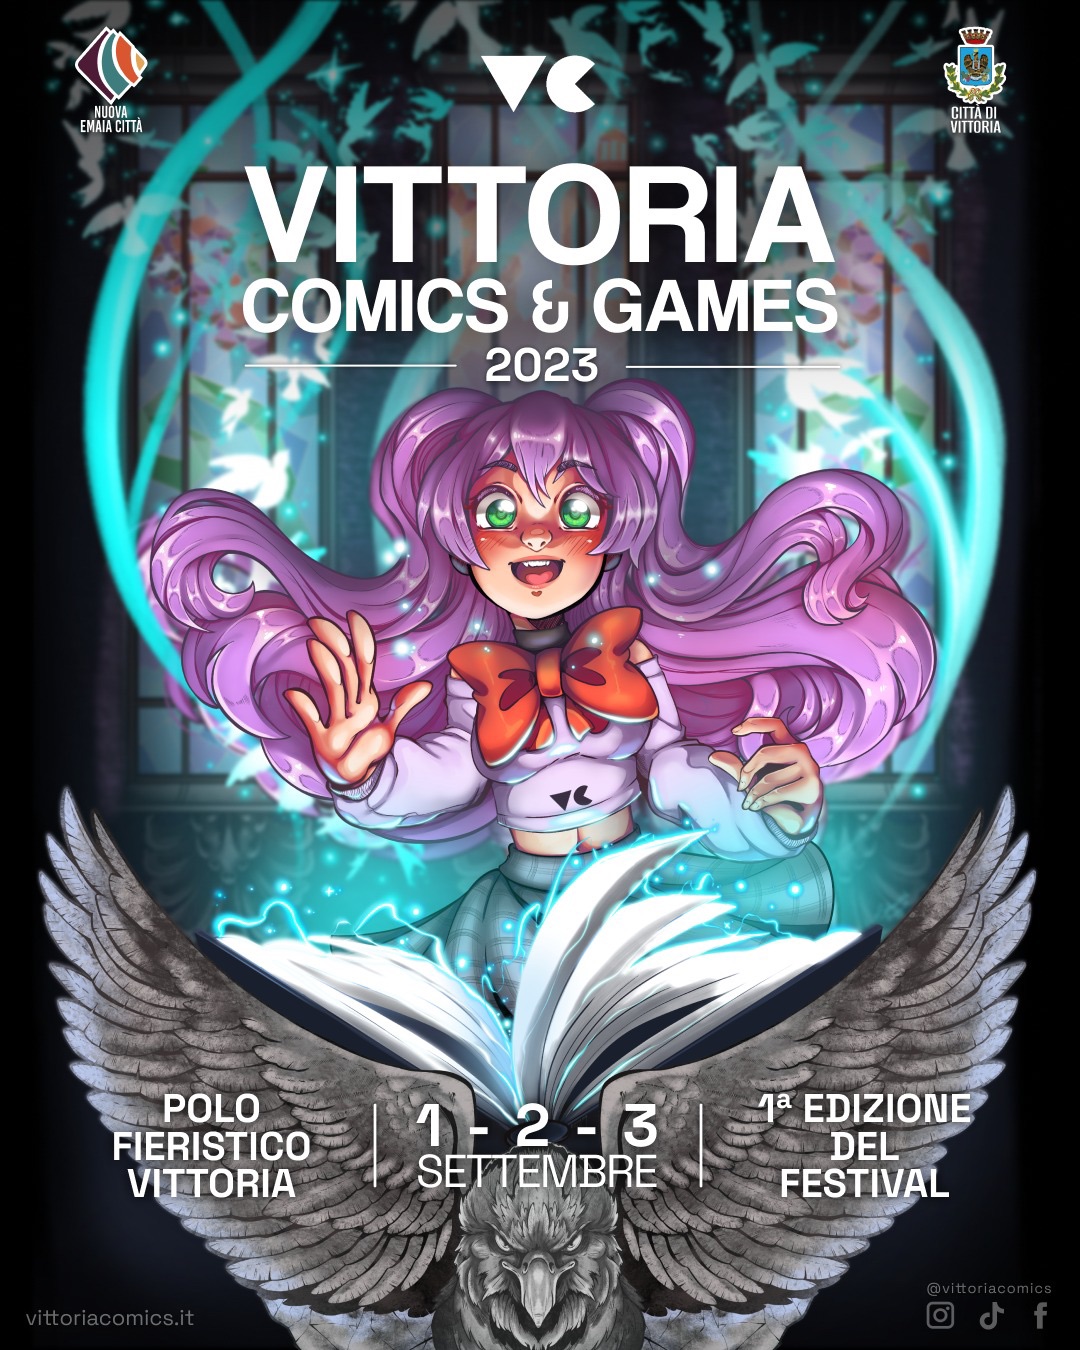 Grande successo per Vittoria Comics & Games